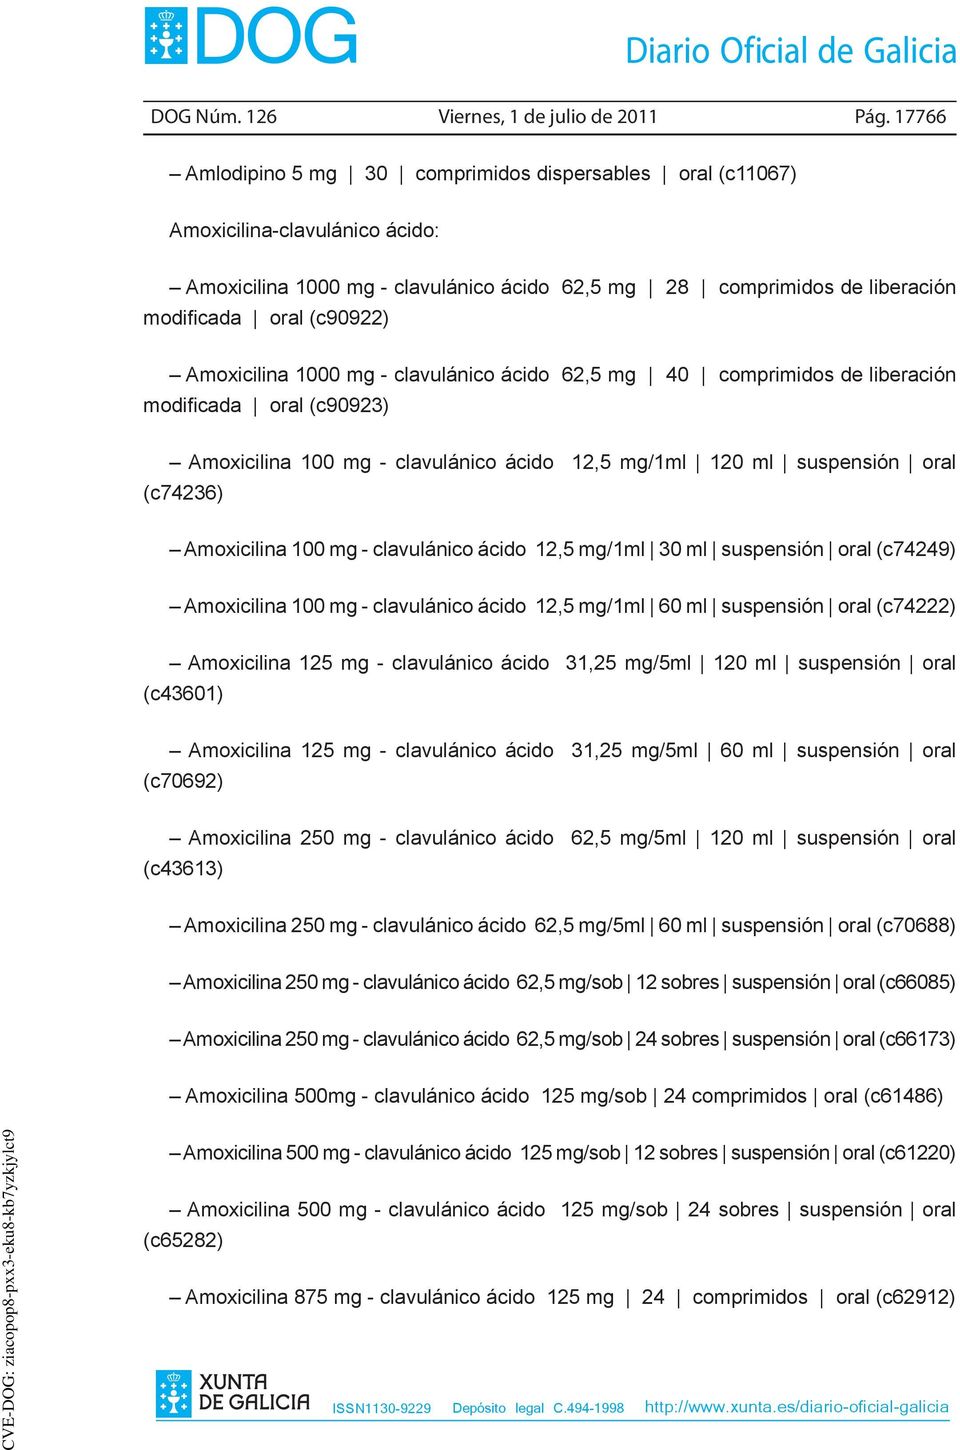 Amoxicilina 1000 mg - clavulánico ácido 62,5 mg 40 comprimidos de liberación modificada oral (c90923) Amoxicilina 100 mg - clavulánico ácido 12,5 mg/1ml 120 ml suspensión oral (c74236) Amoxicilina